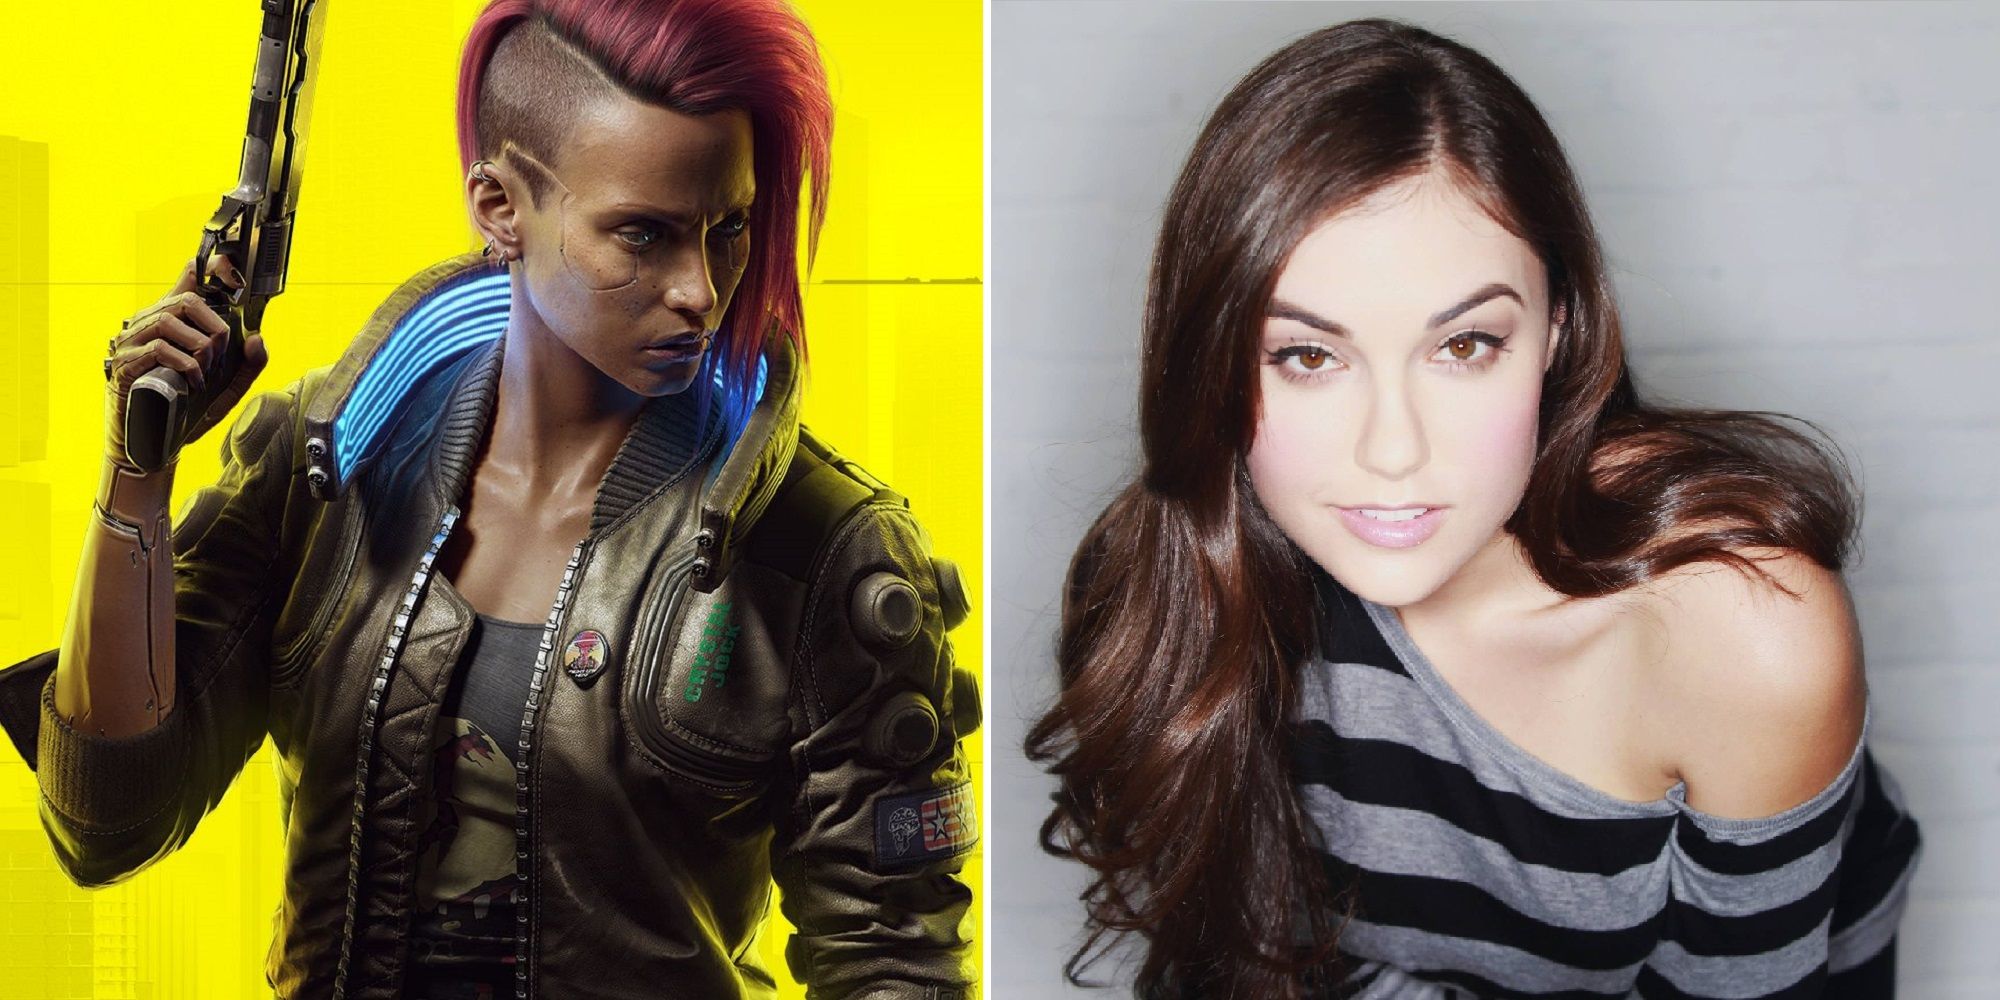 Cyberpunk V On the Left, Sasha Grey On The Right